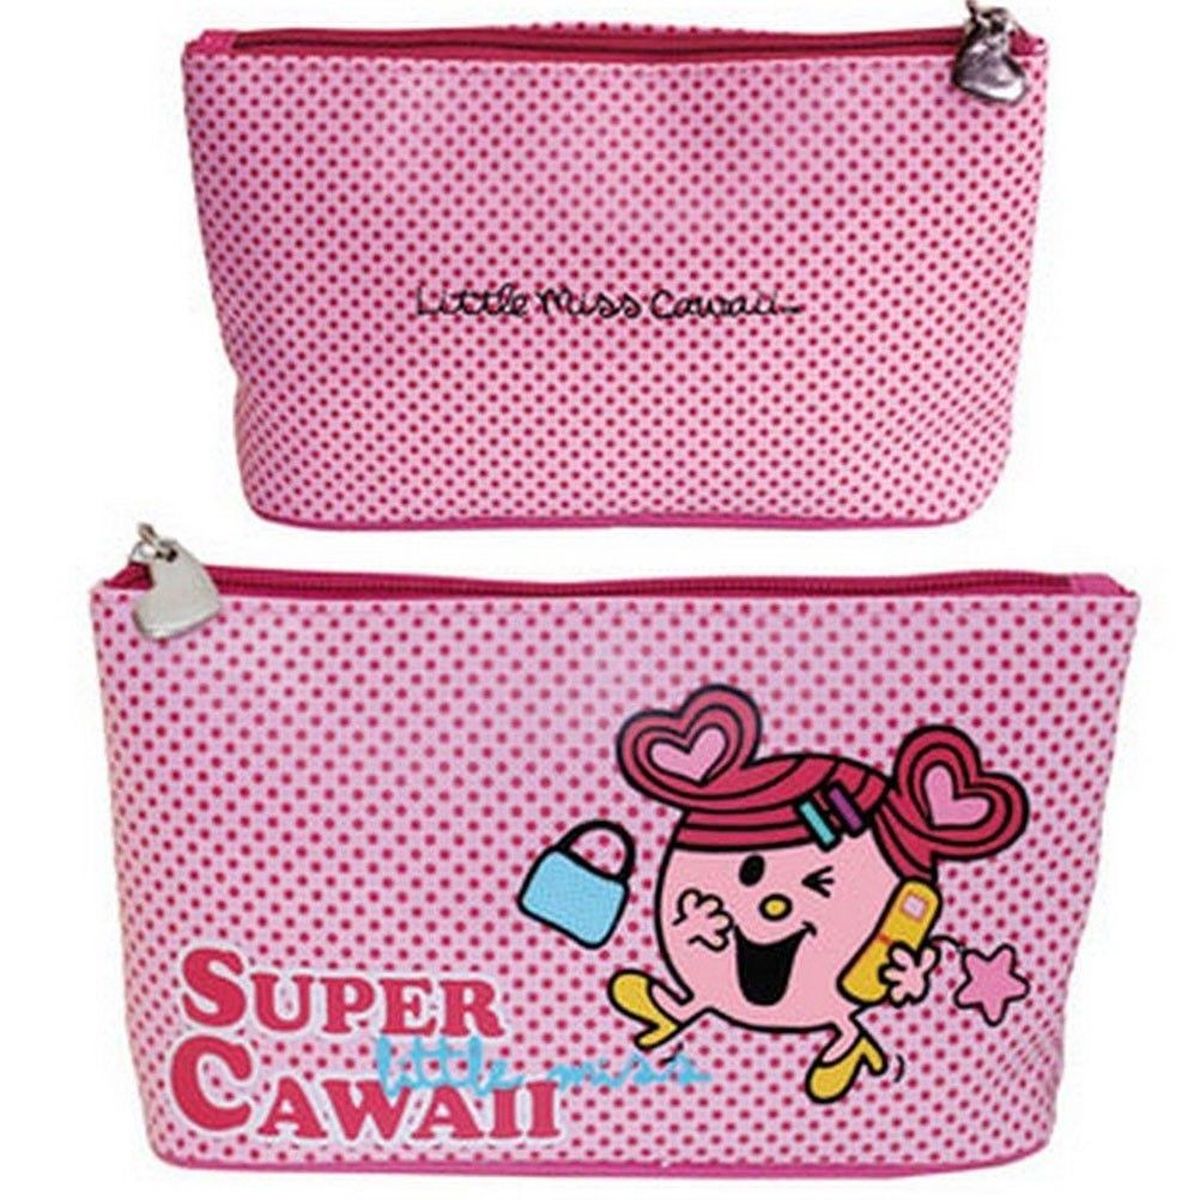 Little Miss Super Cawaii cosmetic bag